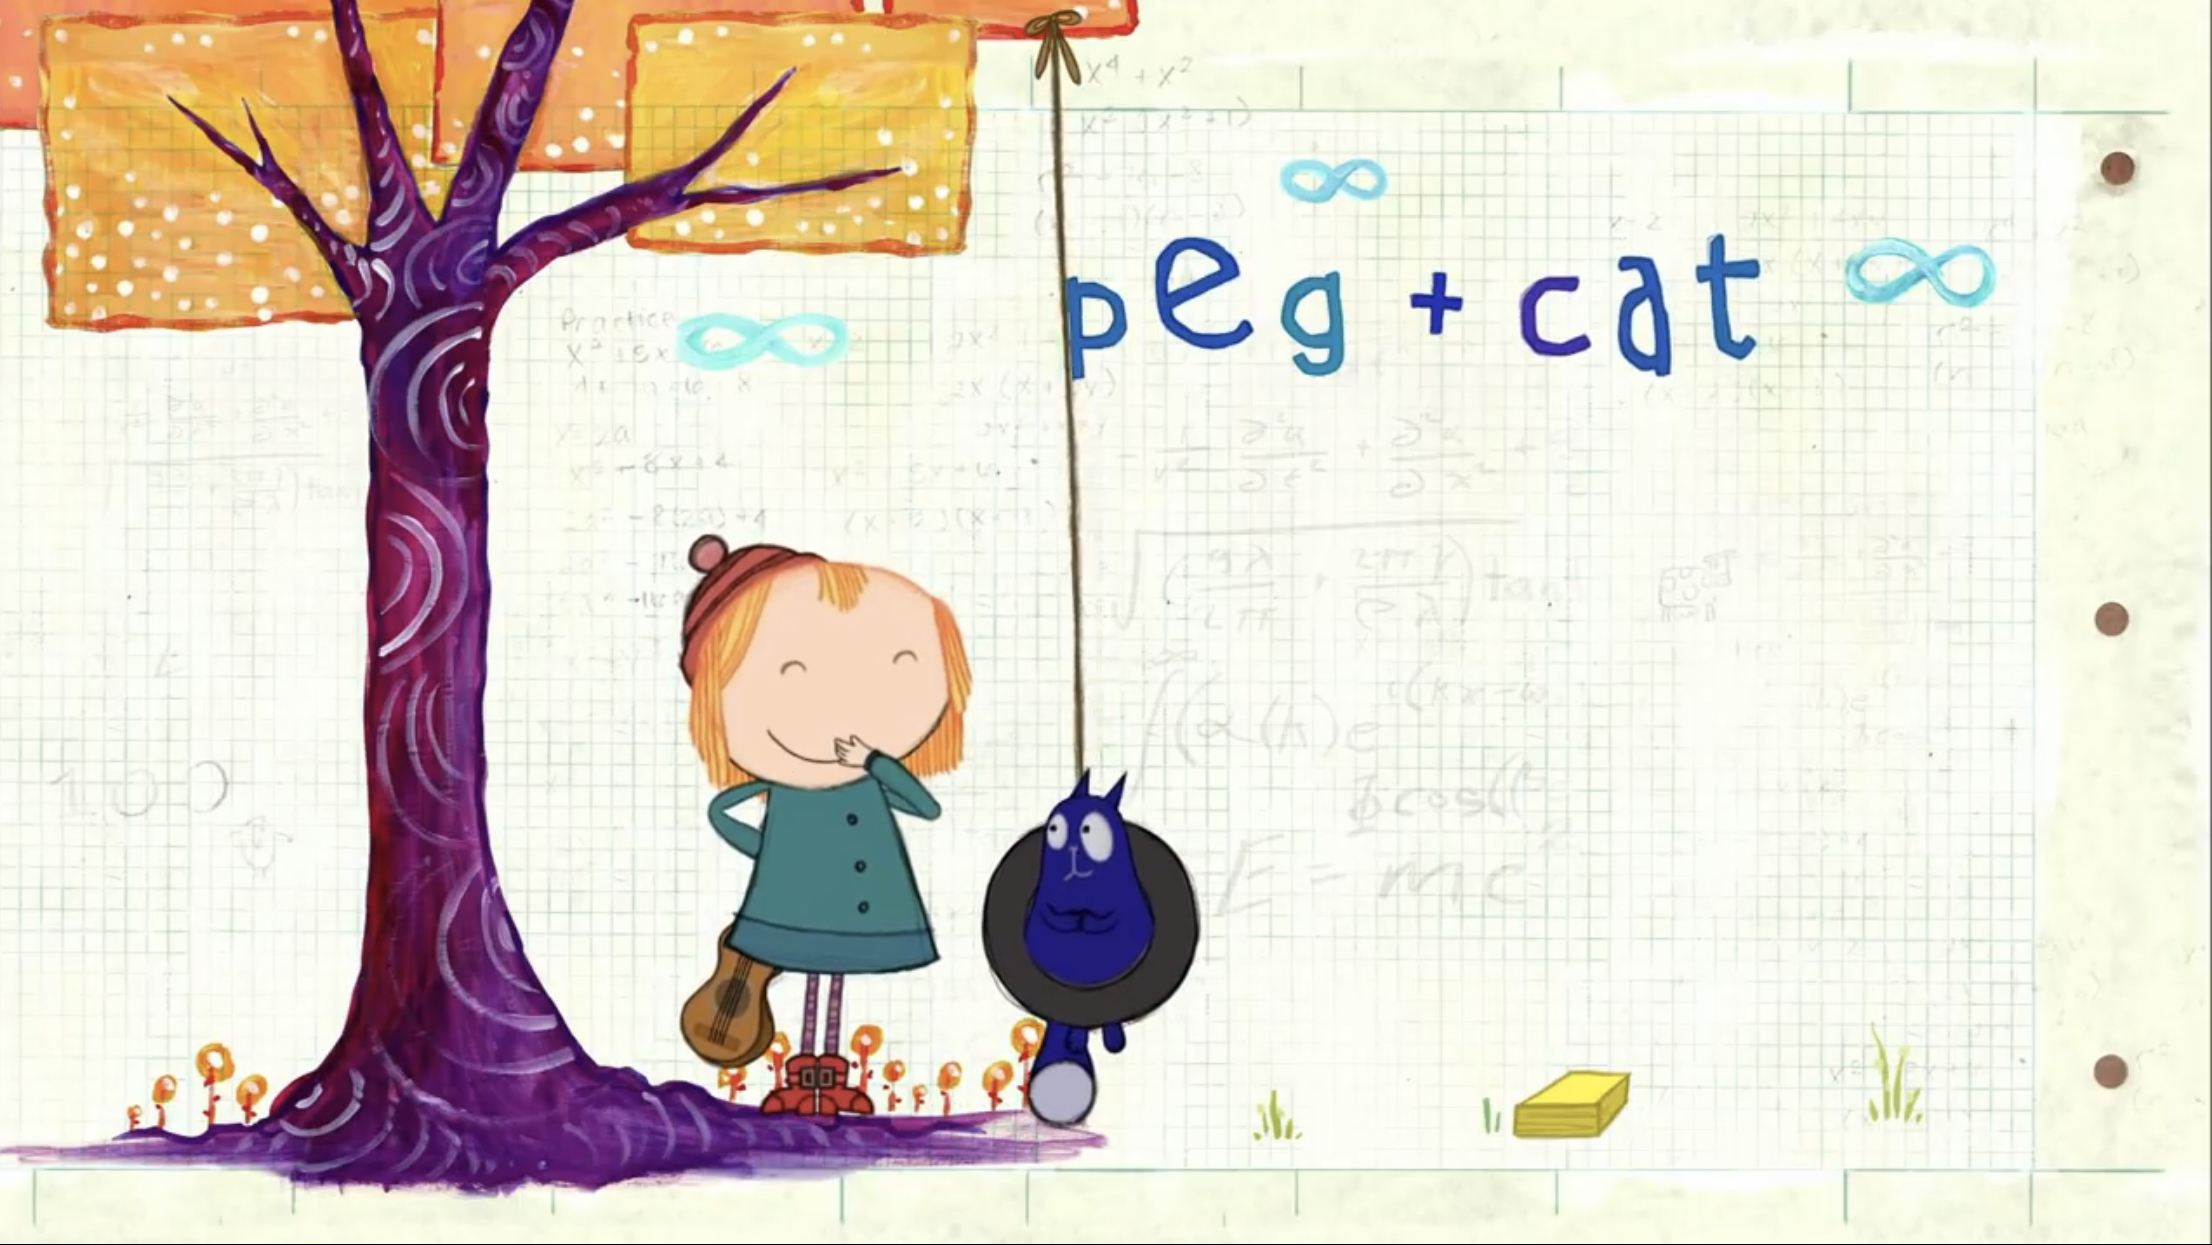 Peg + cat logo.jpeg